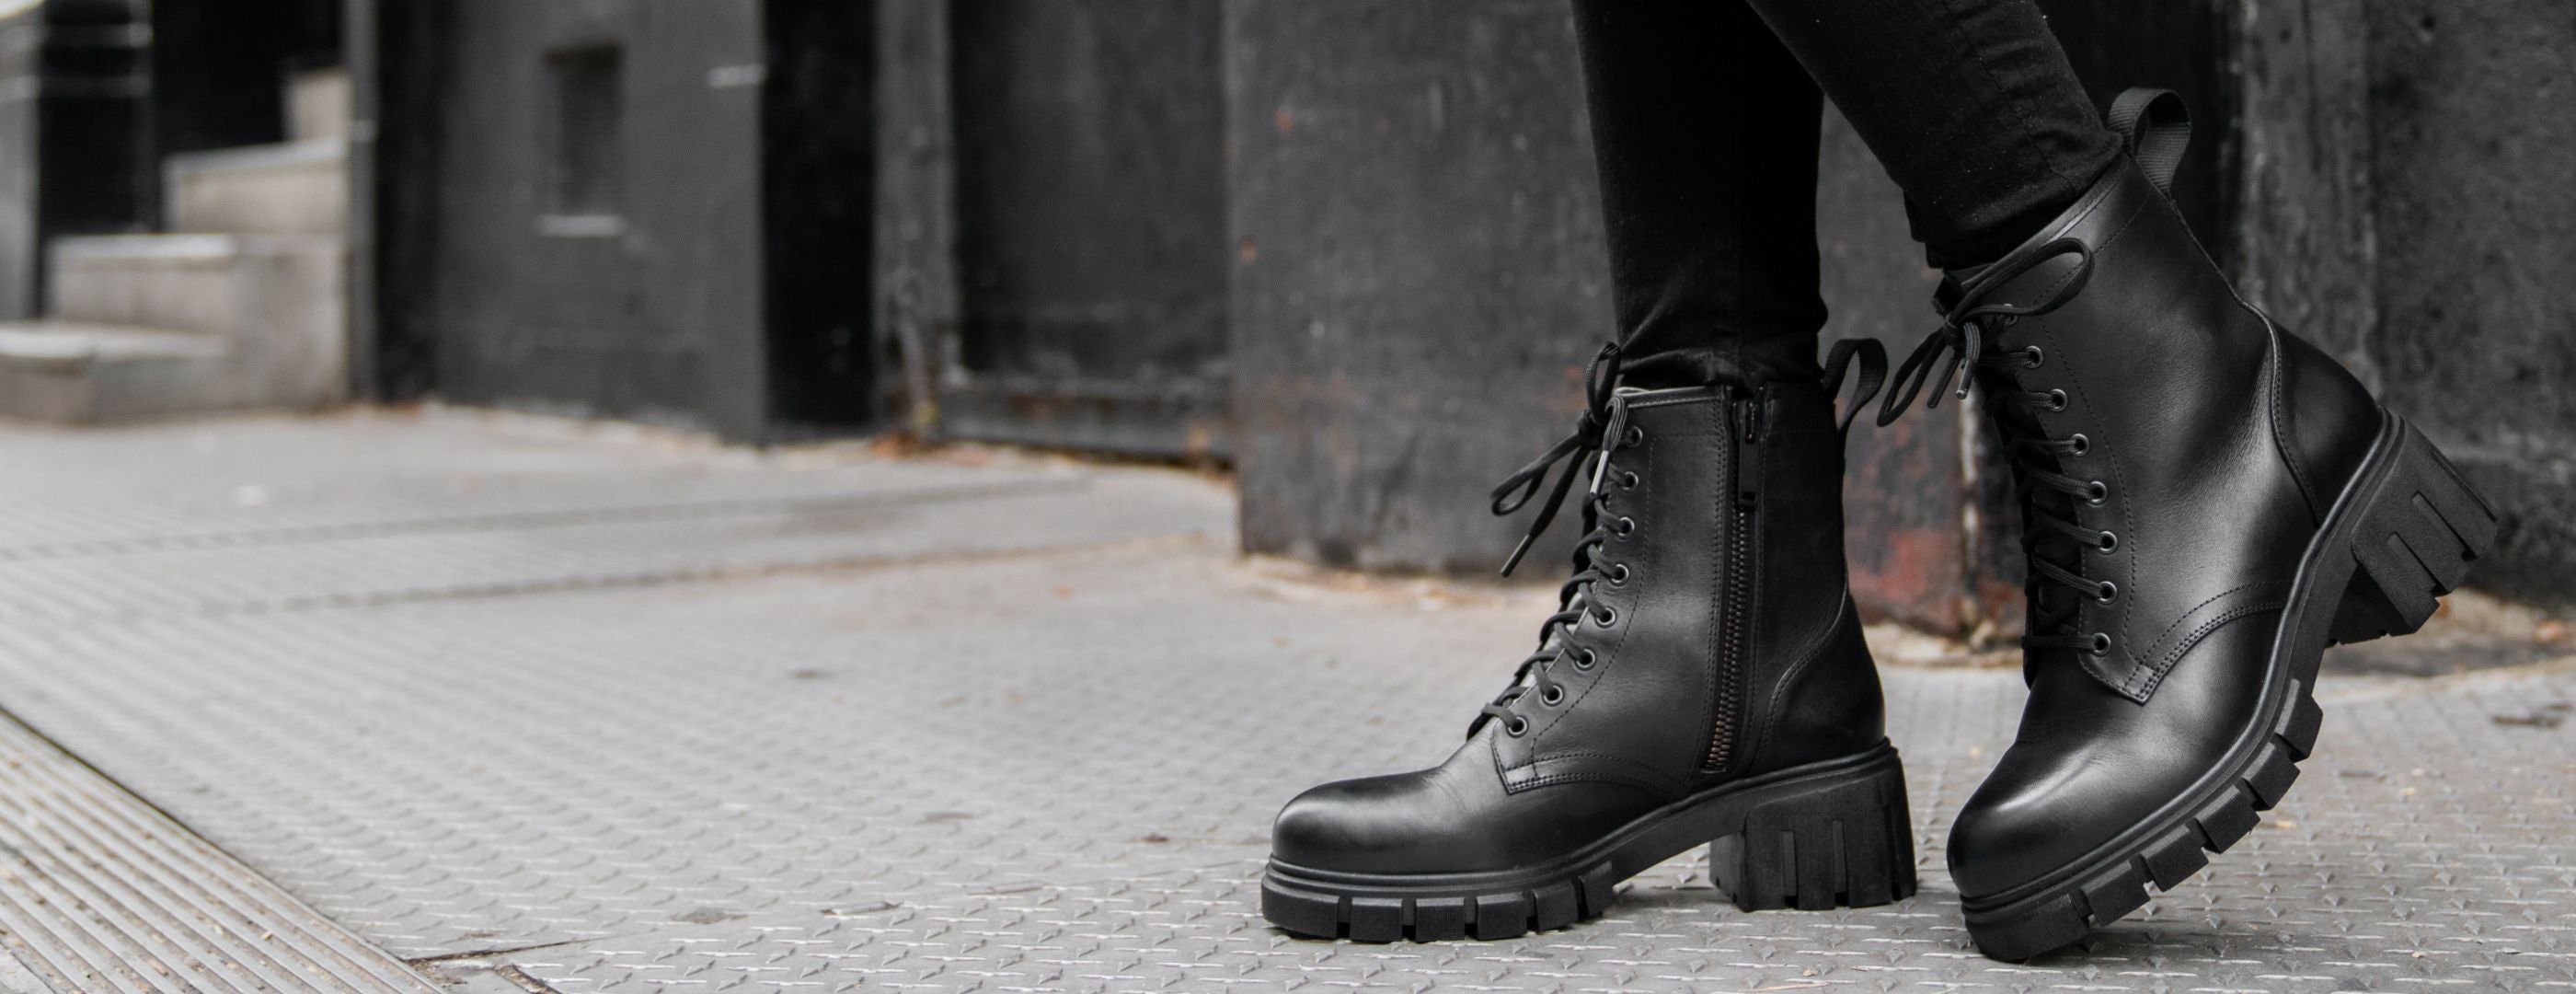 Women's Coda High Heel Zip-Up Boot In Black Cherry Leather - Thursday